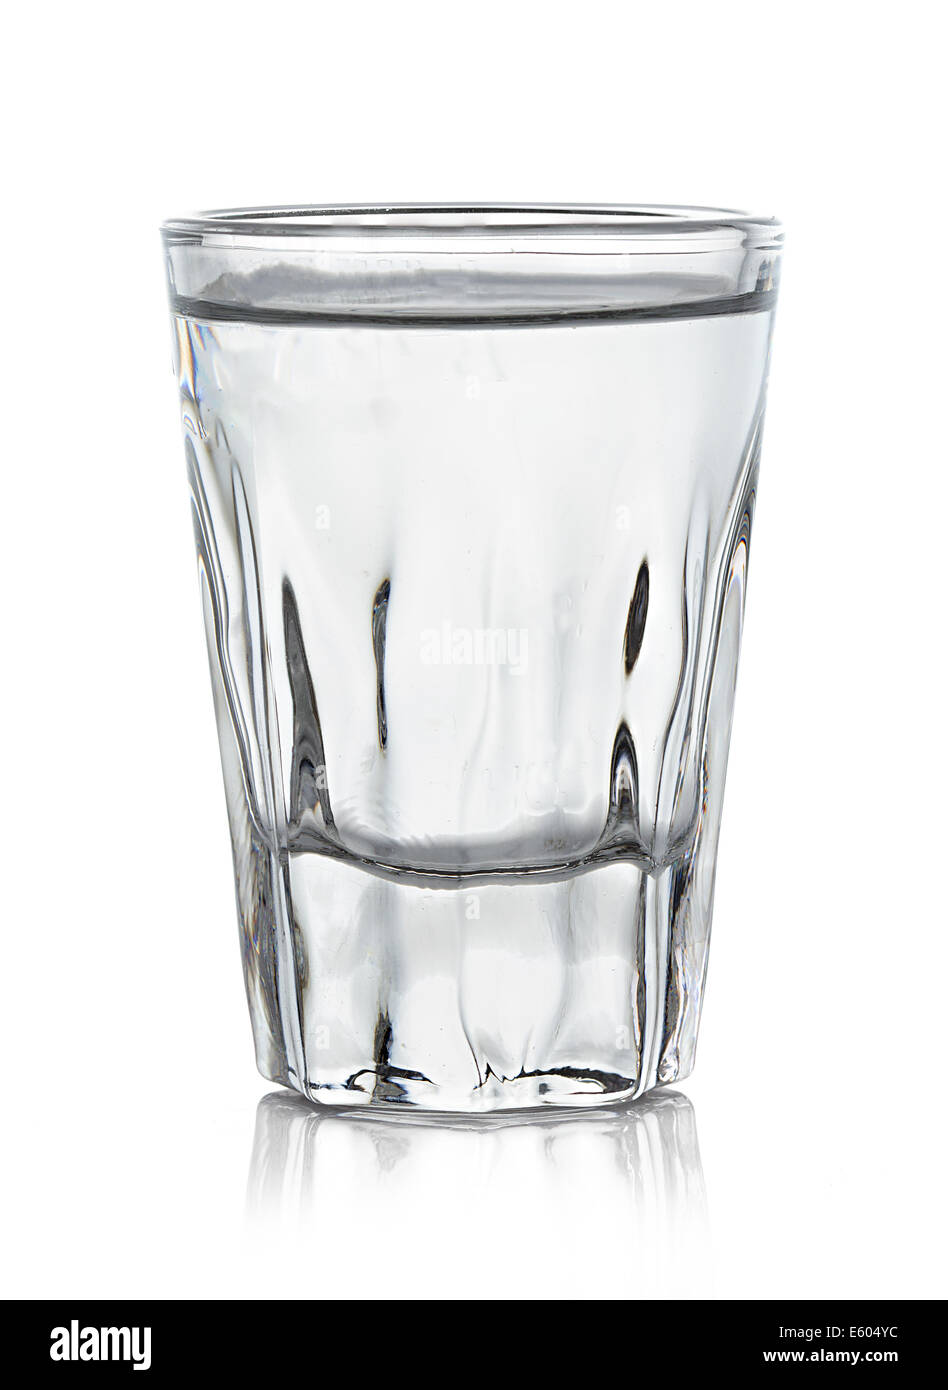 glass of vodka isolated on white background Stock Photo